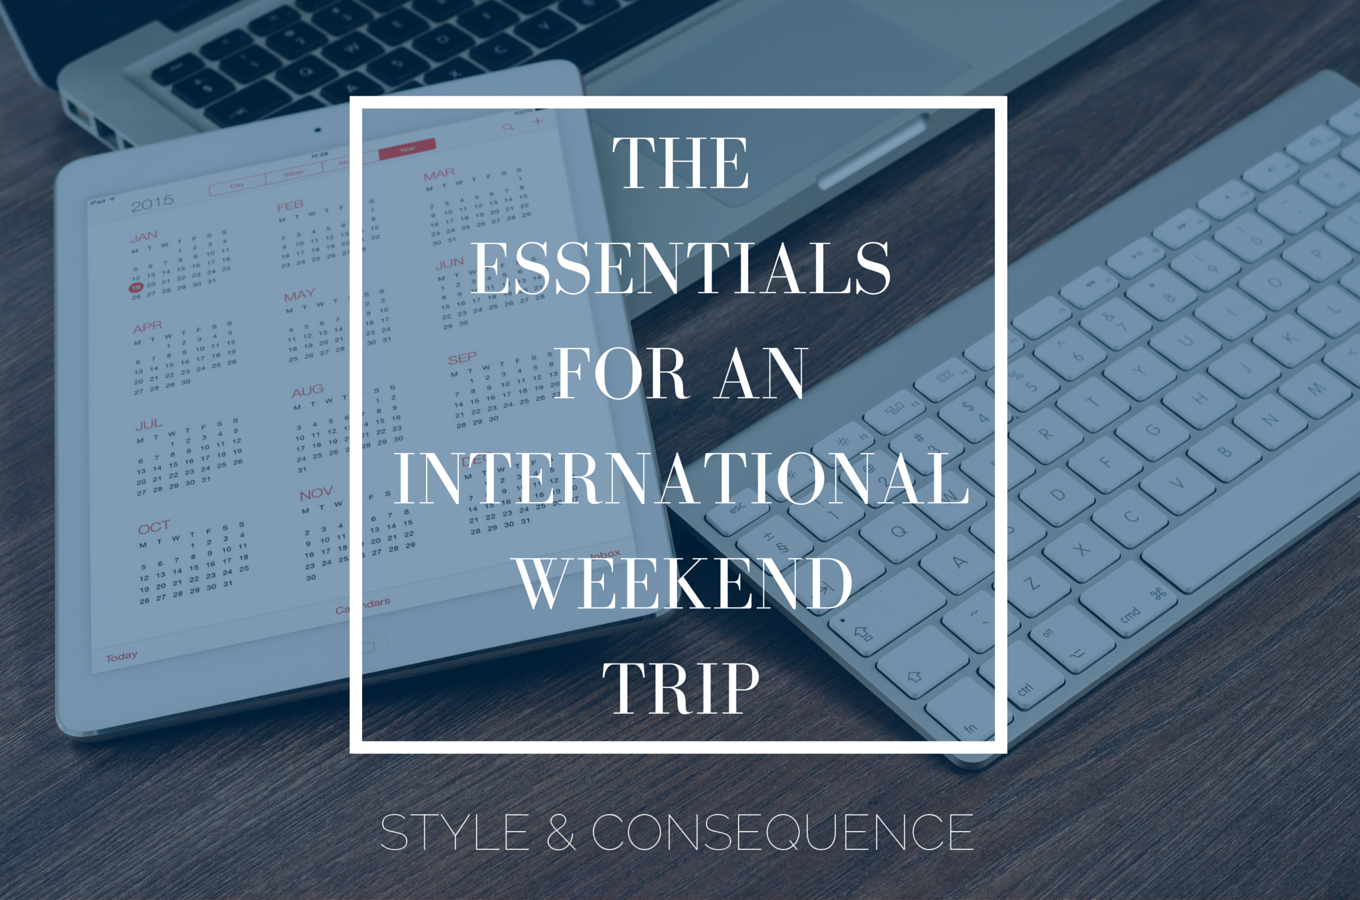 THE ESSENTIALS FOR AN INTERNATIONAL WEEKEND TRIP